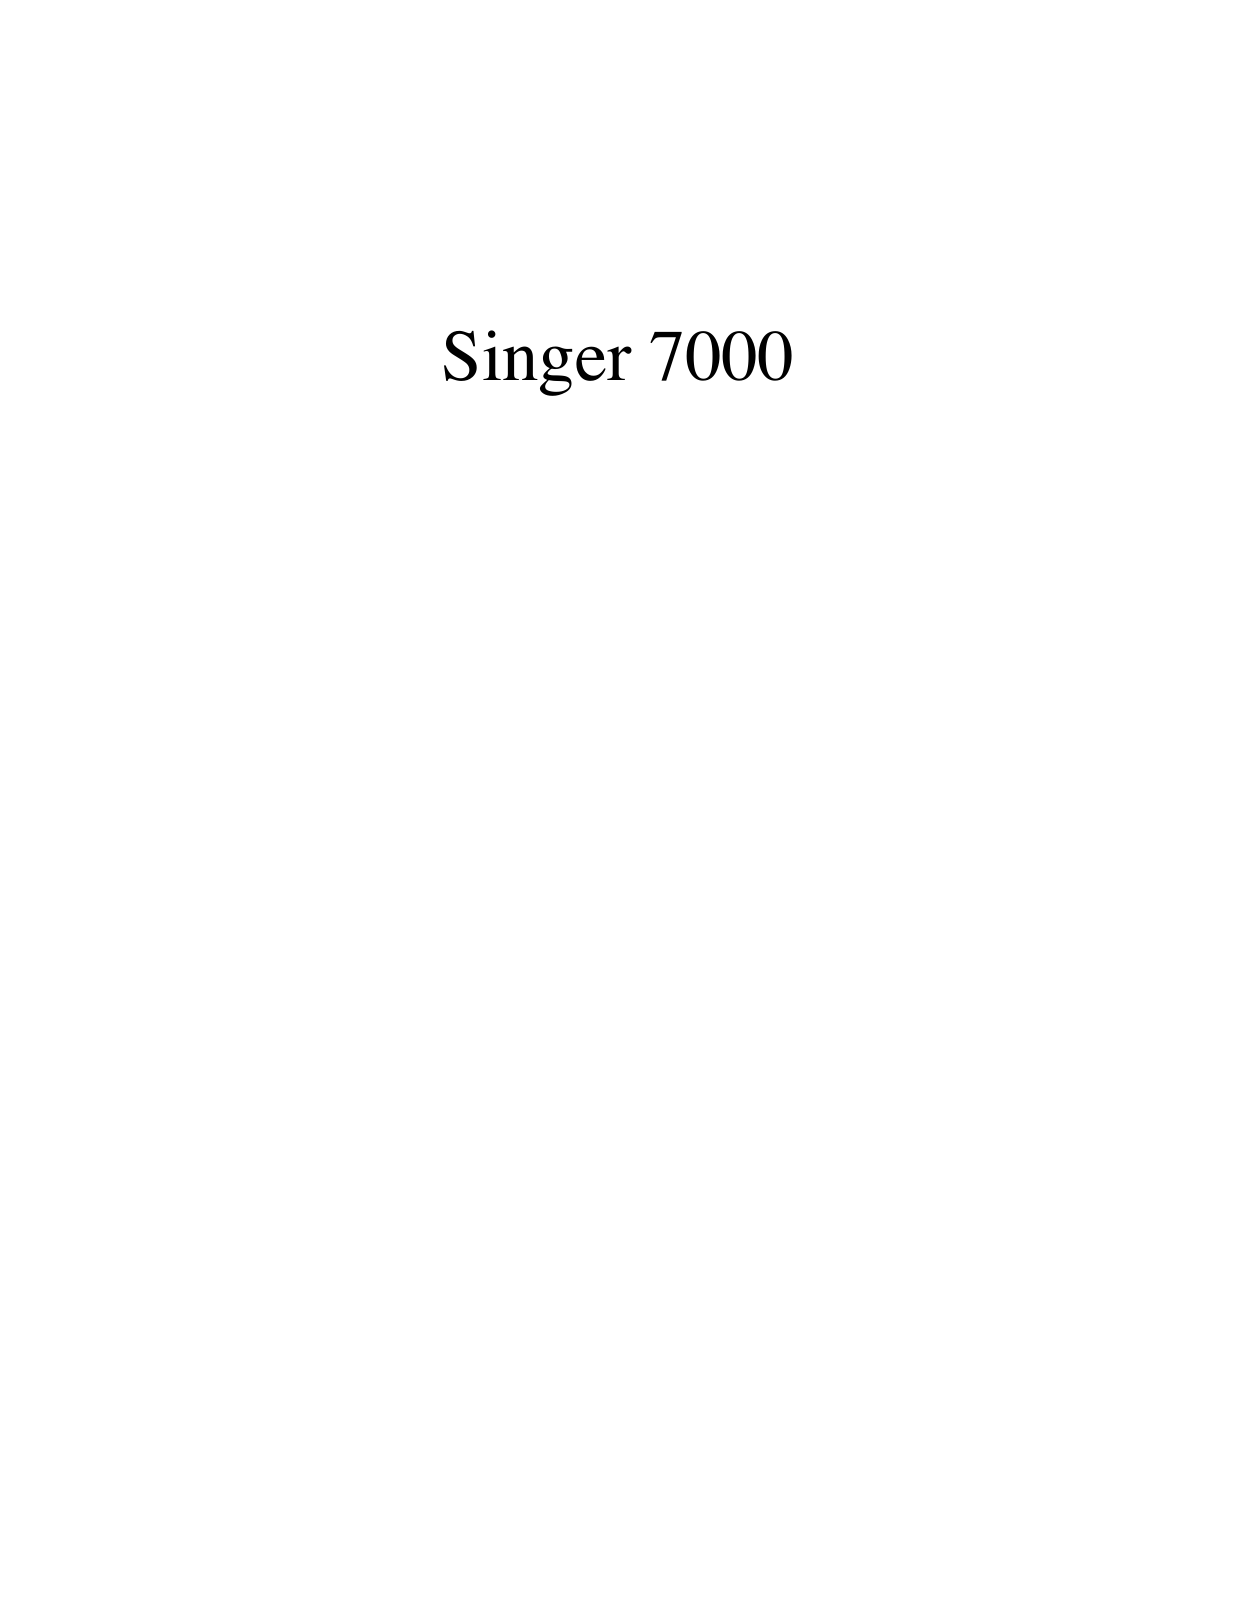 Singer Imperial 7000 Owner's Manual